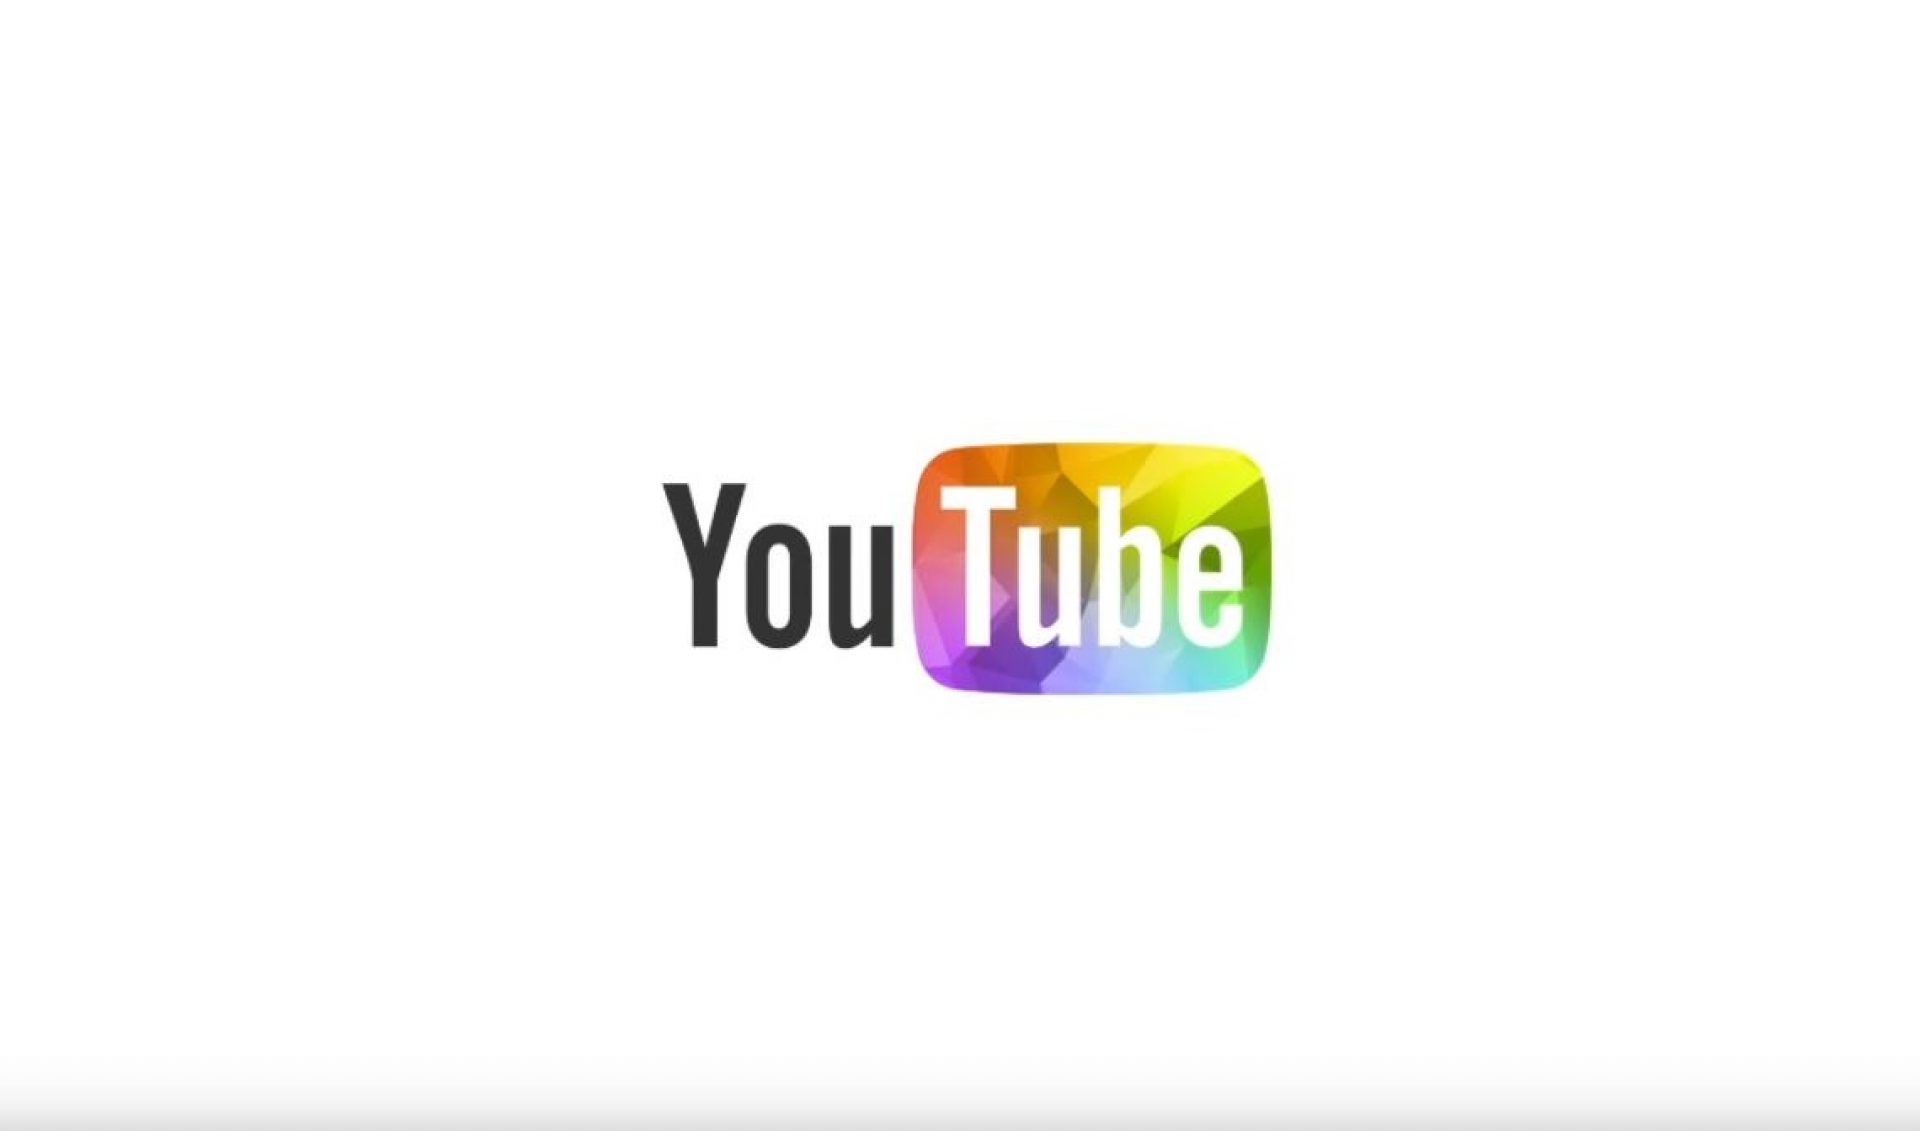 YouTube Launches #ProudToBe Campaign Celebrating Global LGBTQA Community